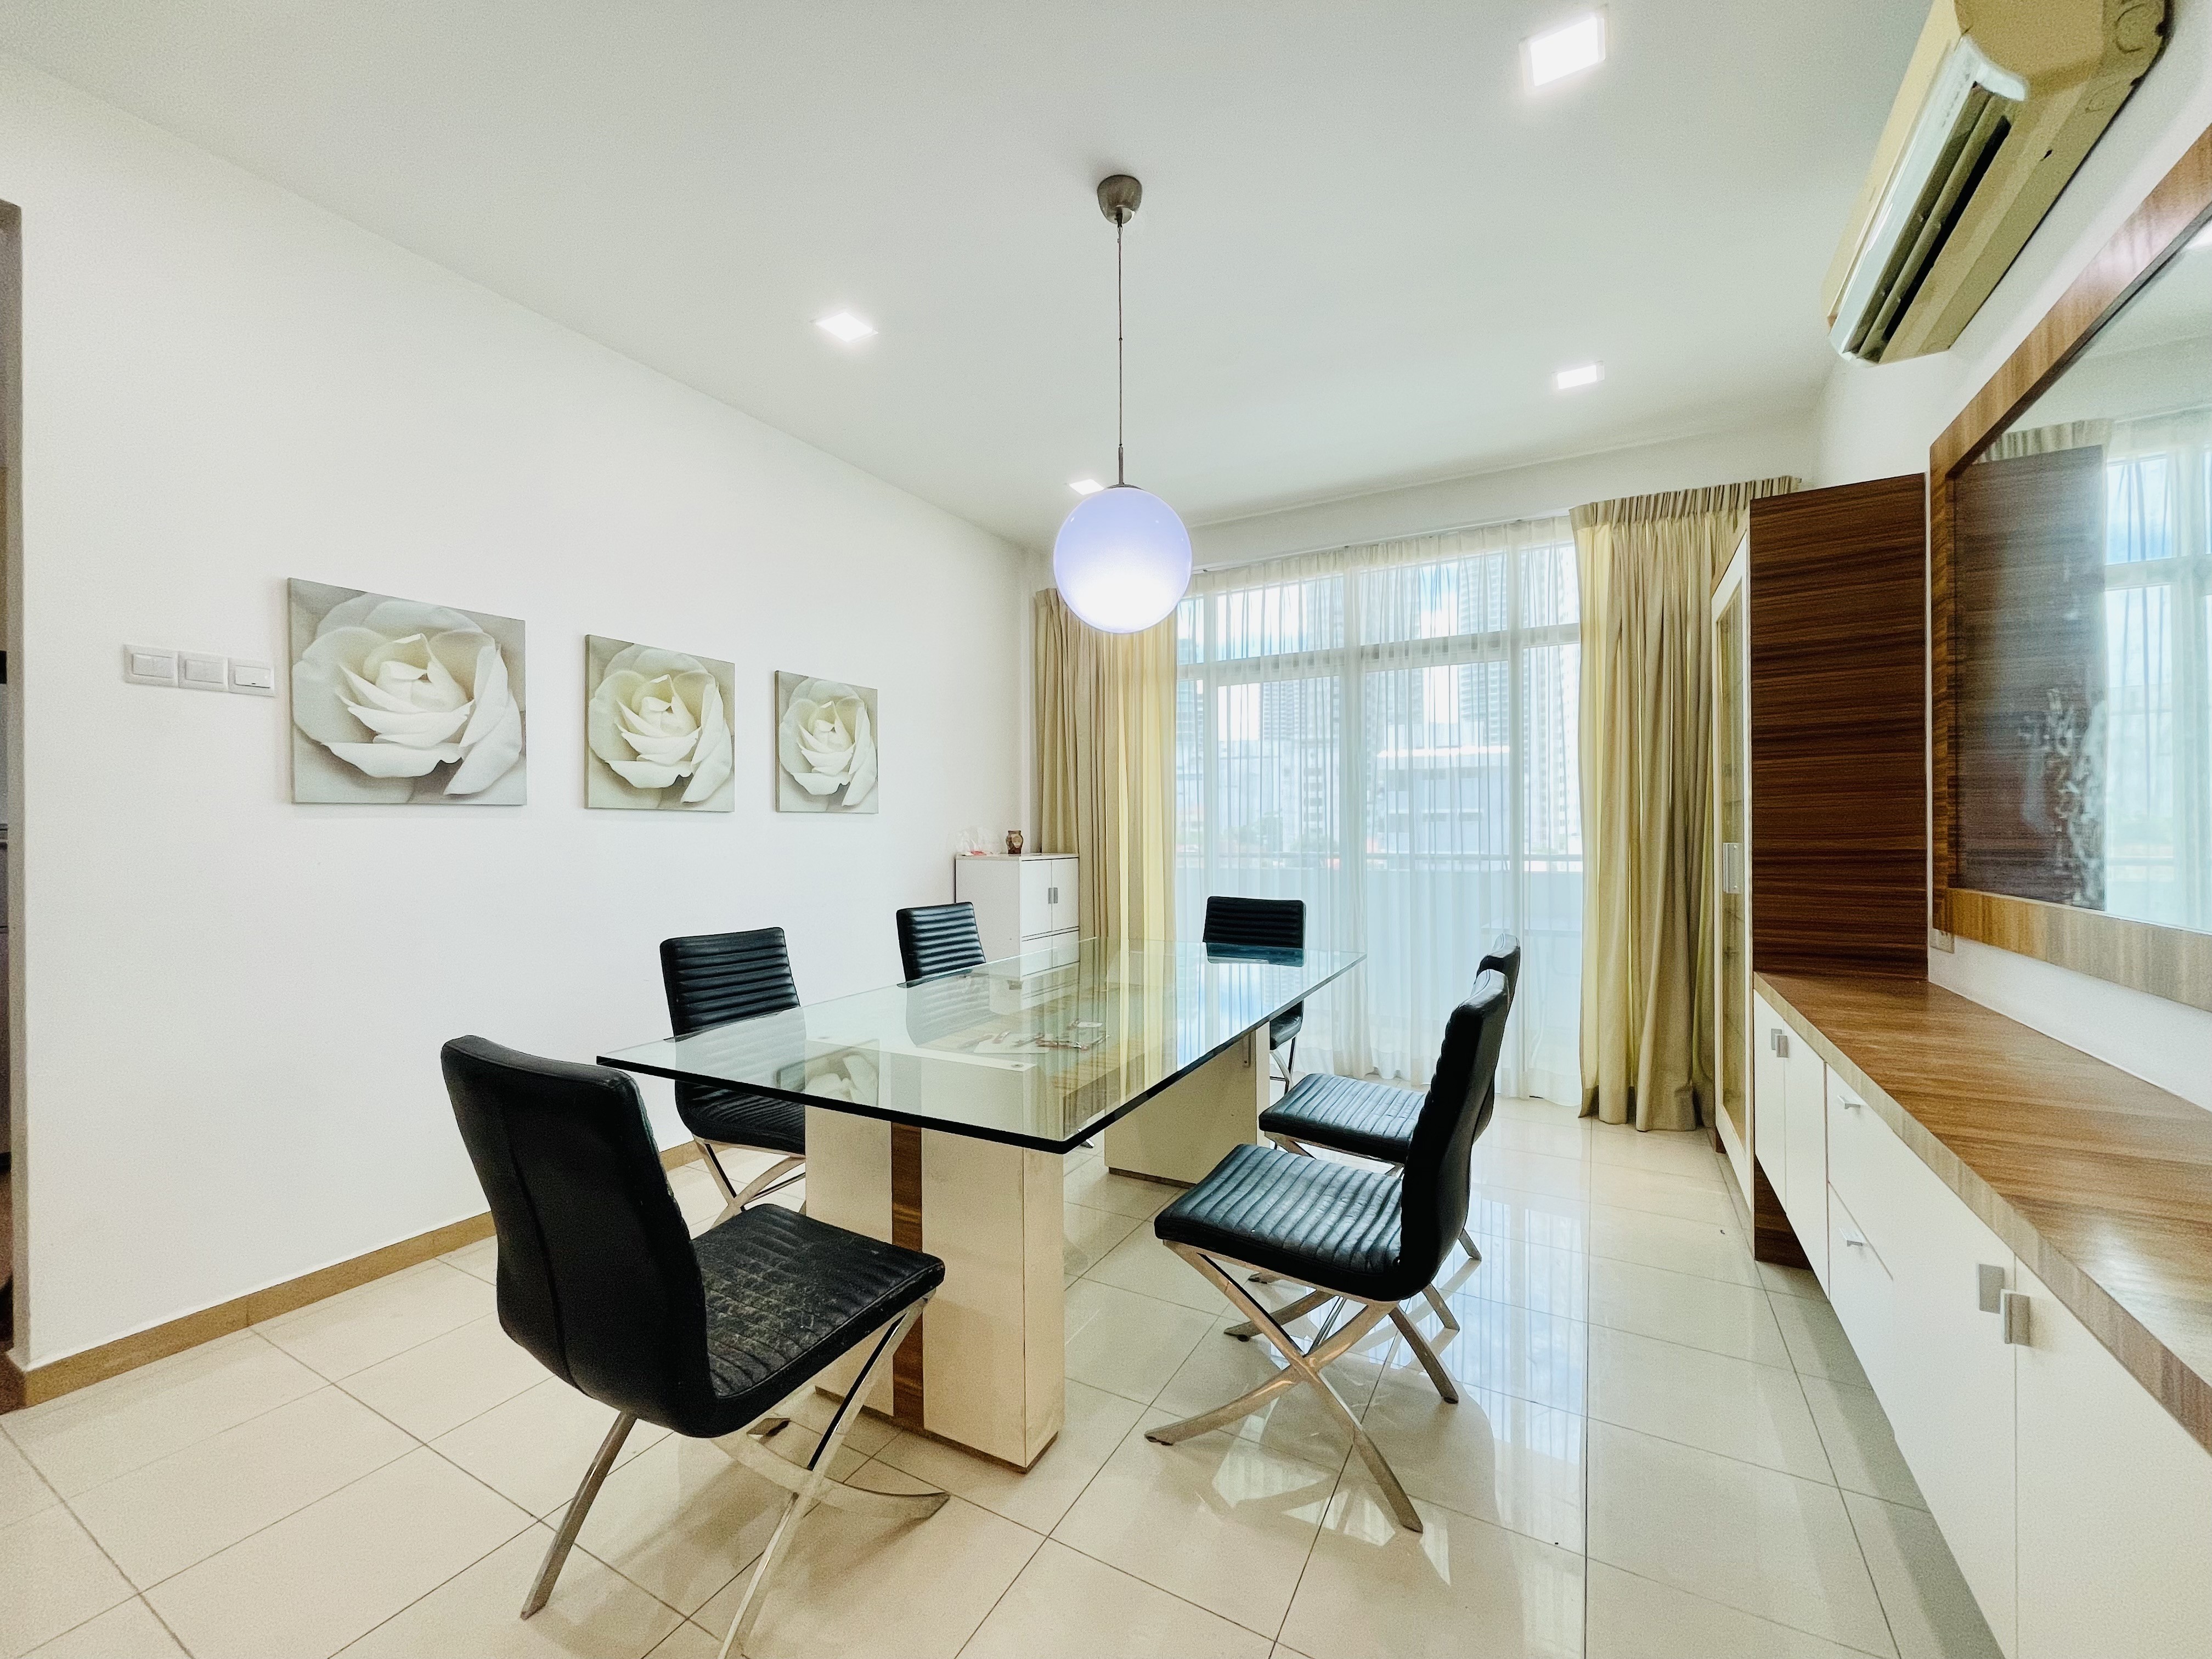 Luxury Condominium For Sales At Gurney Palace, Penang